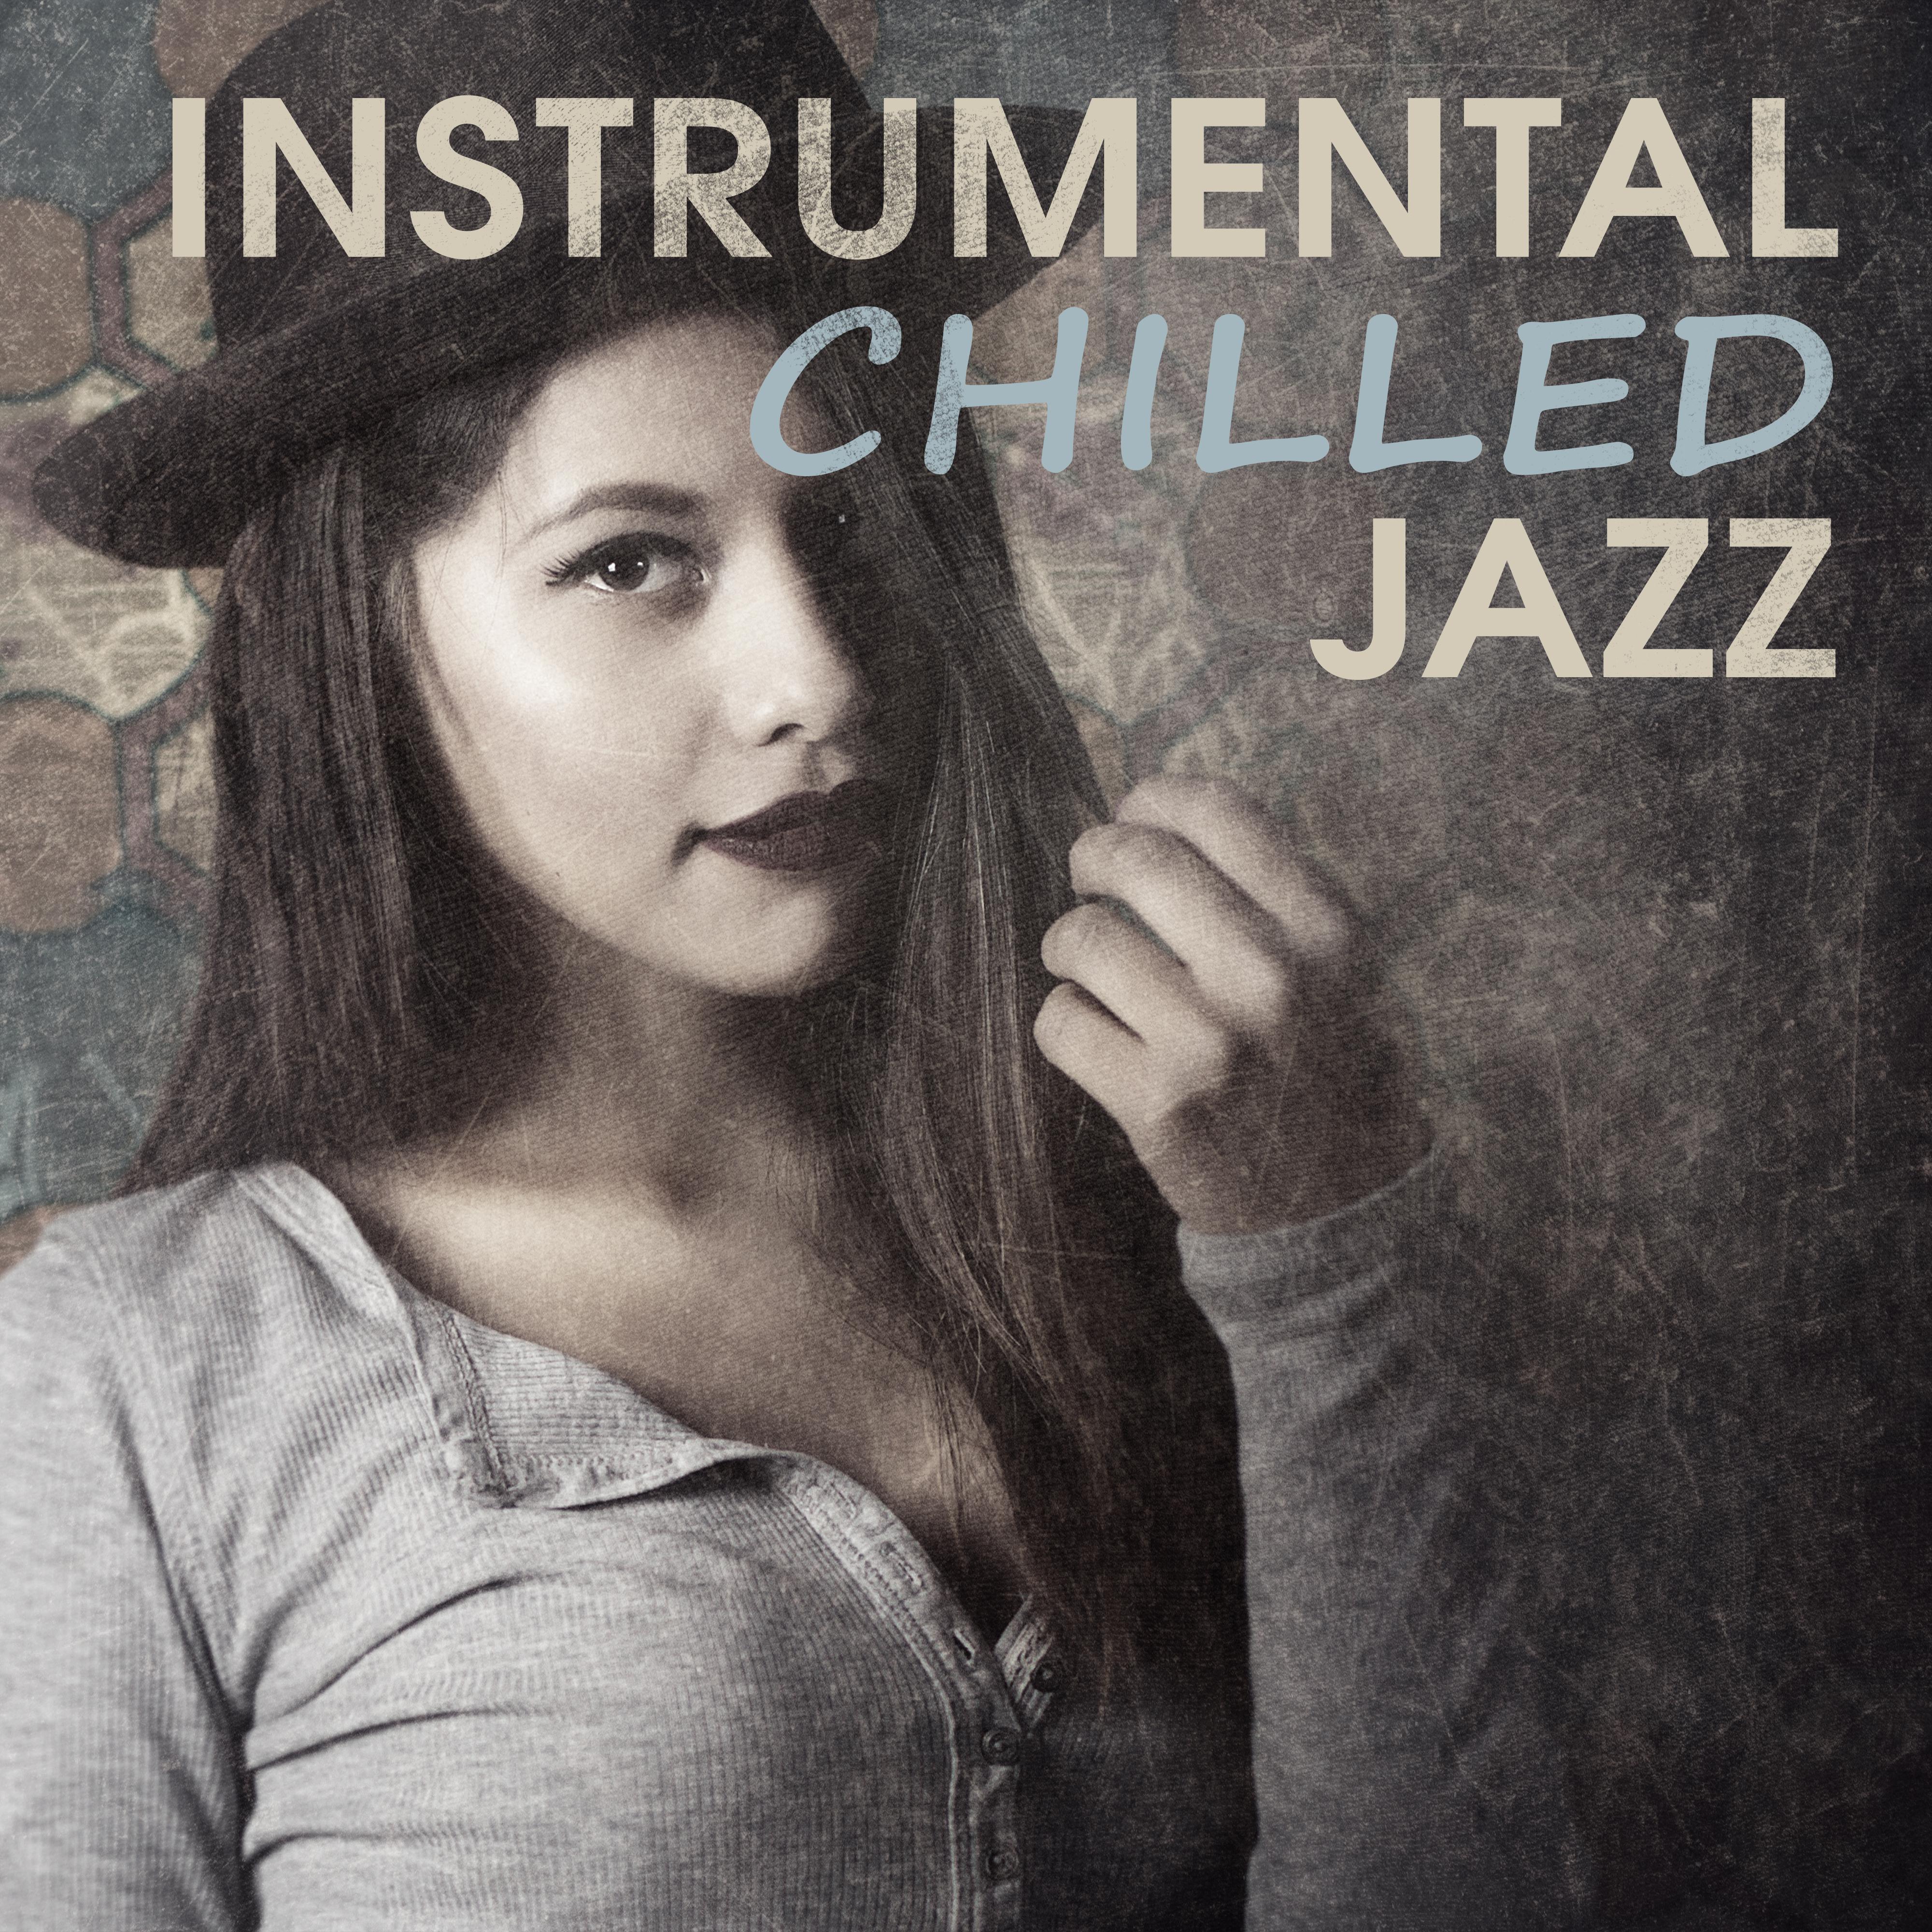 Instrumental Chilled Jazz  Smooth Jazz, Easy Listening, Piano Bar, Relax, Mellow Jazz Sounds, Light Jazz Sounds